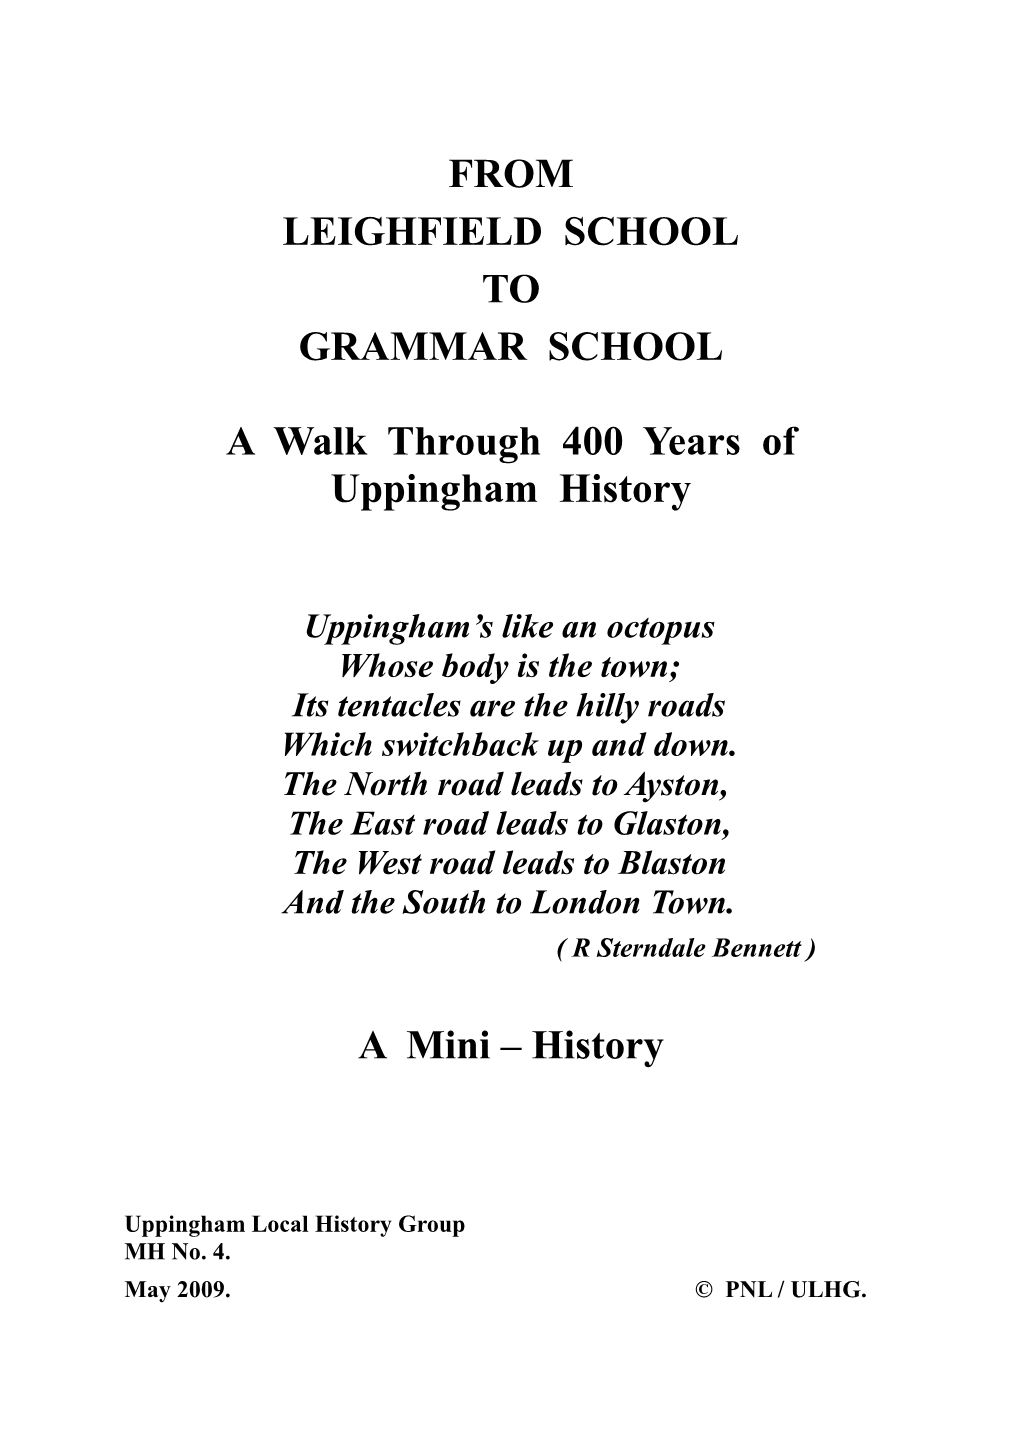 FROM LEIGHFIELD SCHOOL to GRAMMAR SCHOOL a Walk